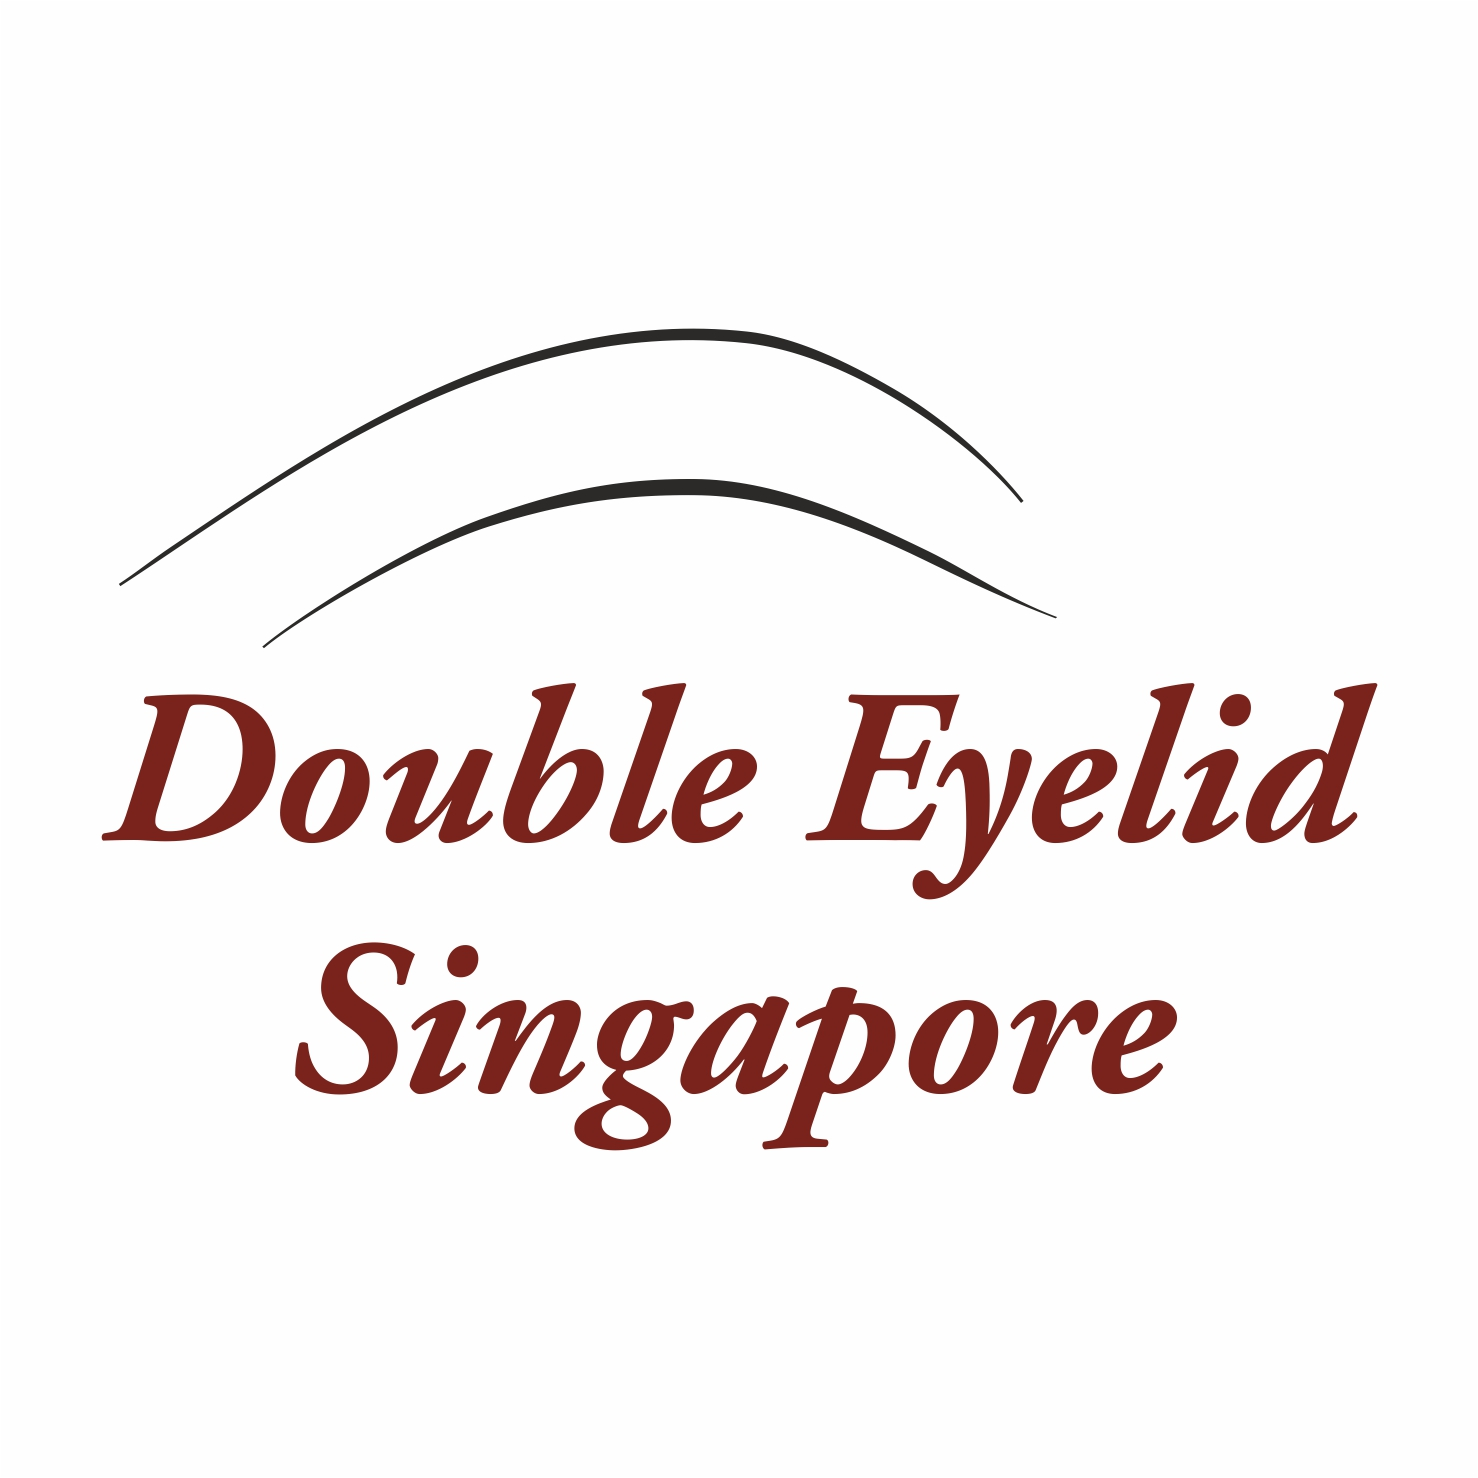 Company Logo For Double eyelid surgery - DoubleEyelidSg.com'